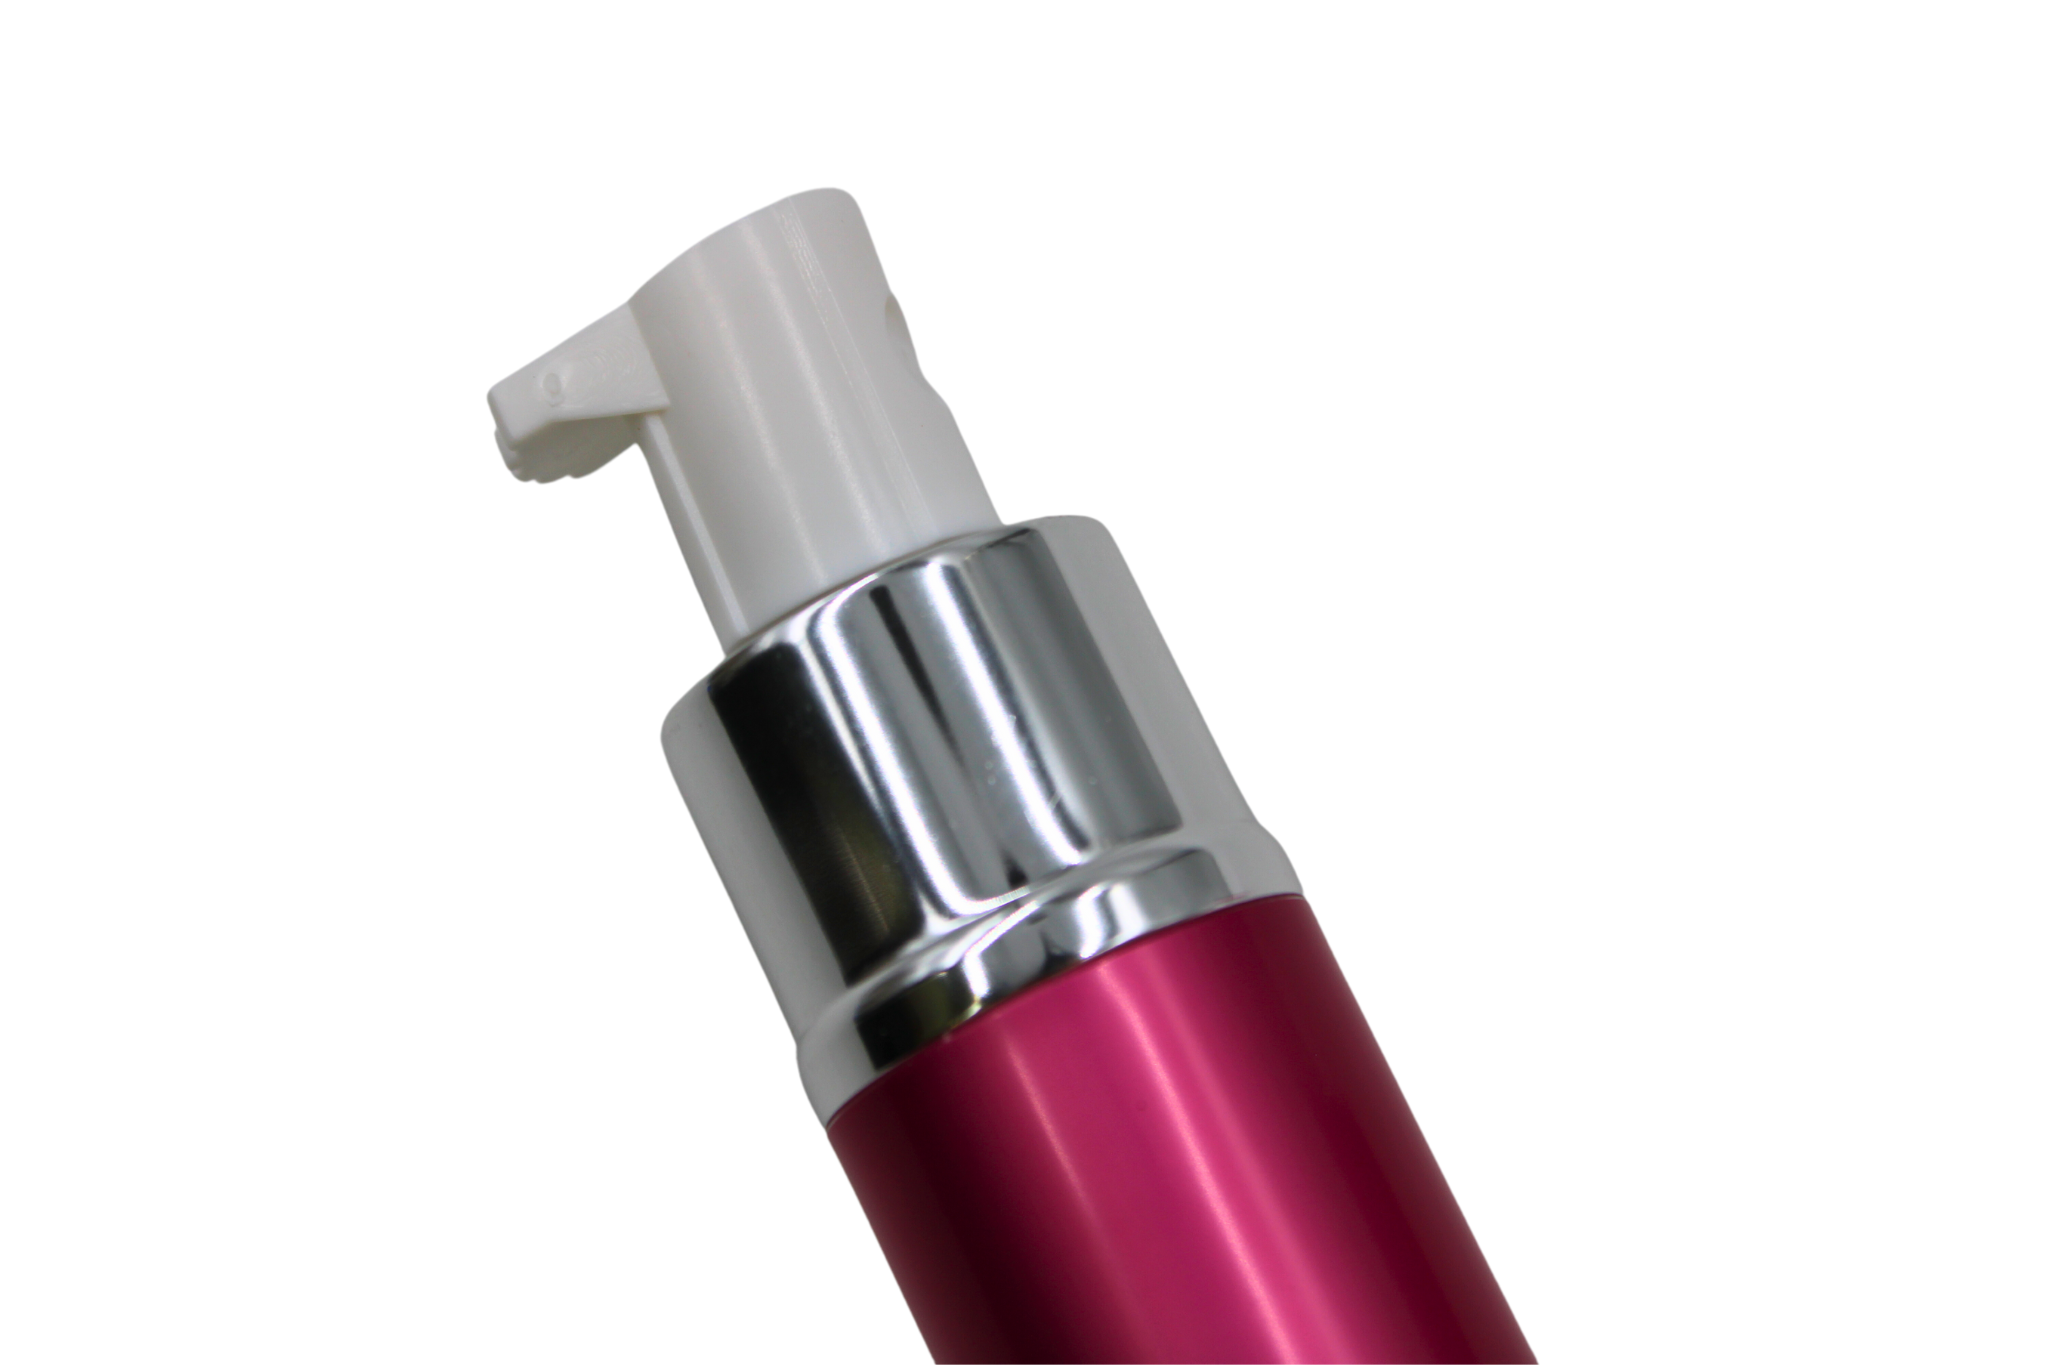 Peppershield Lipstick Guard - Pink